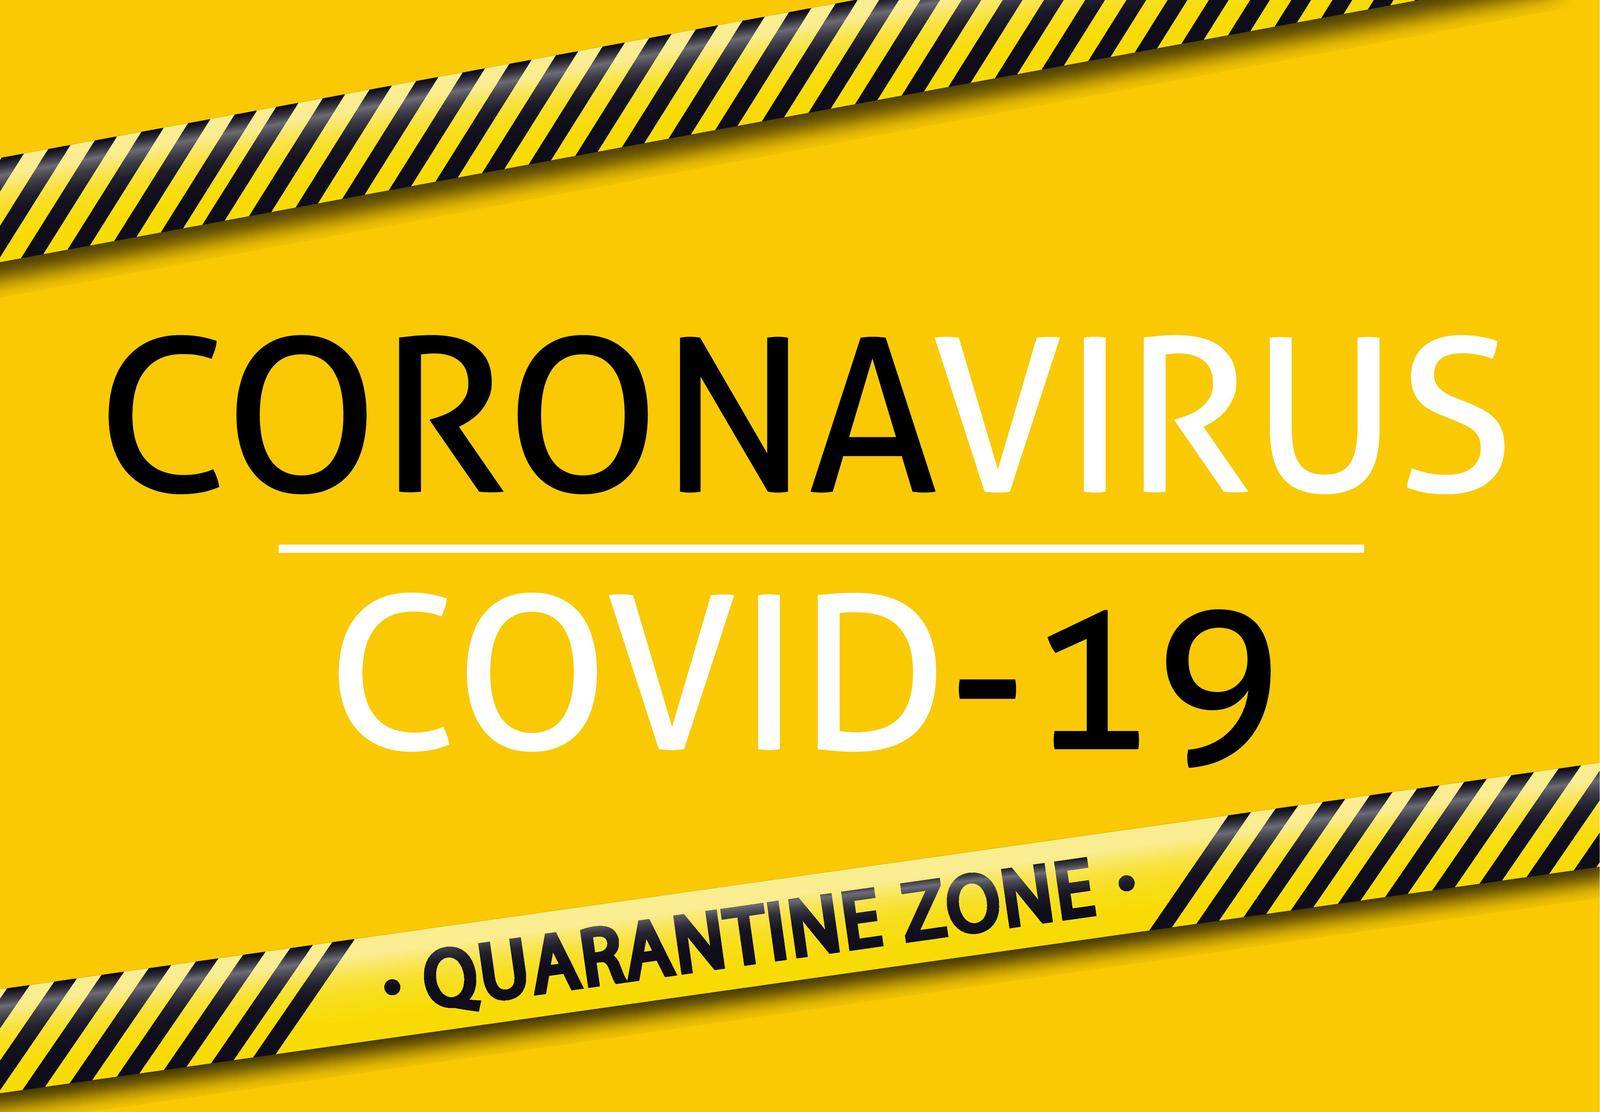 Quarantine Zone. Covid-19 Coronavirus concept